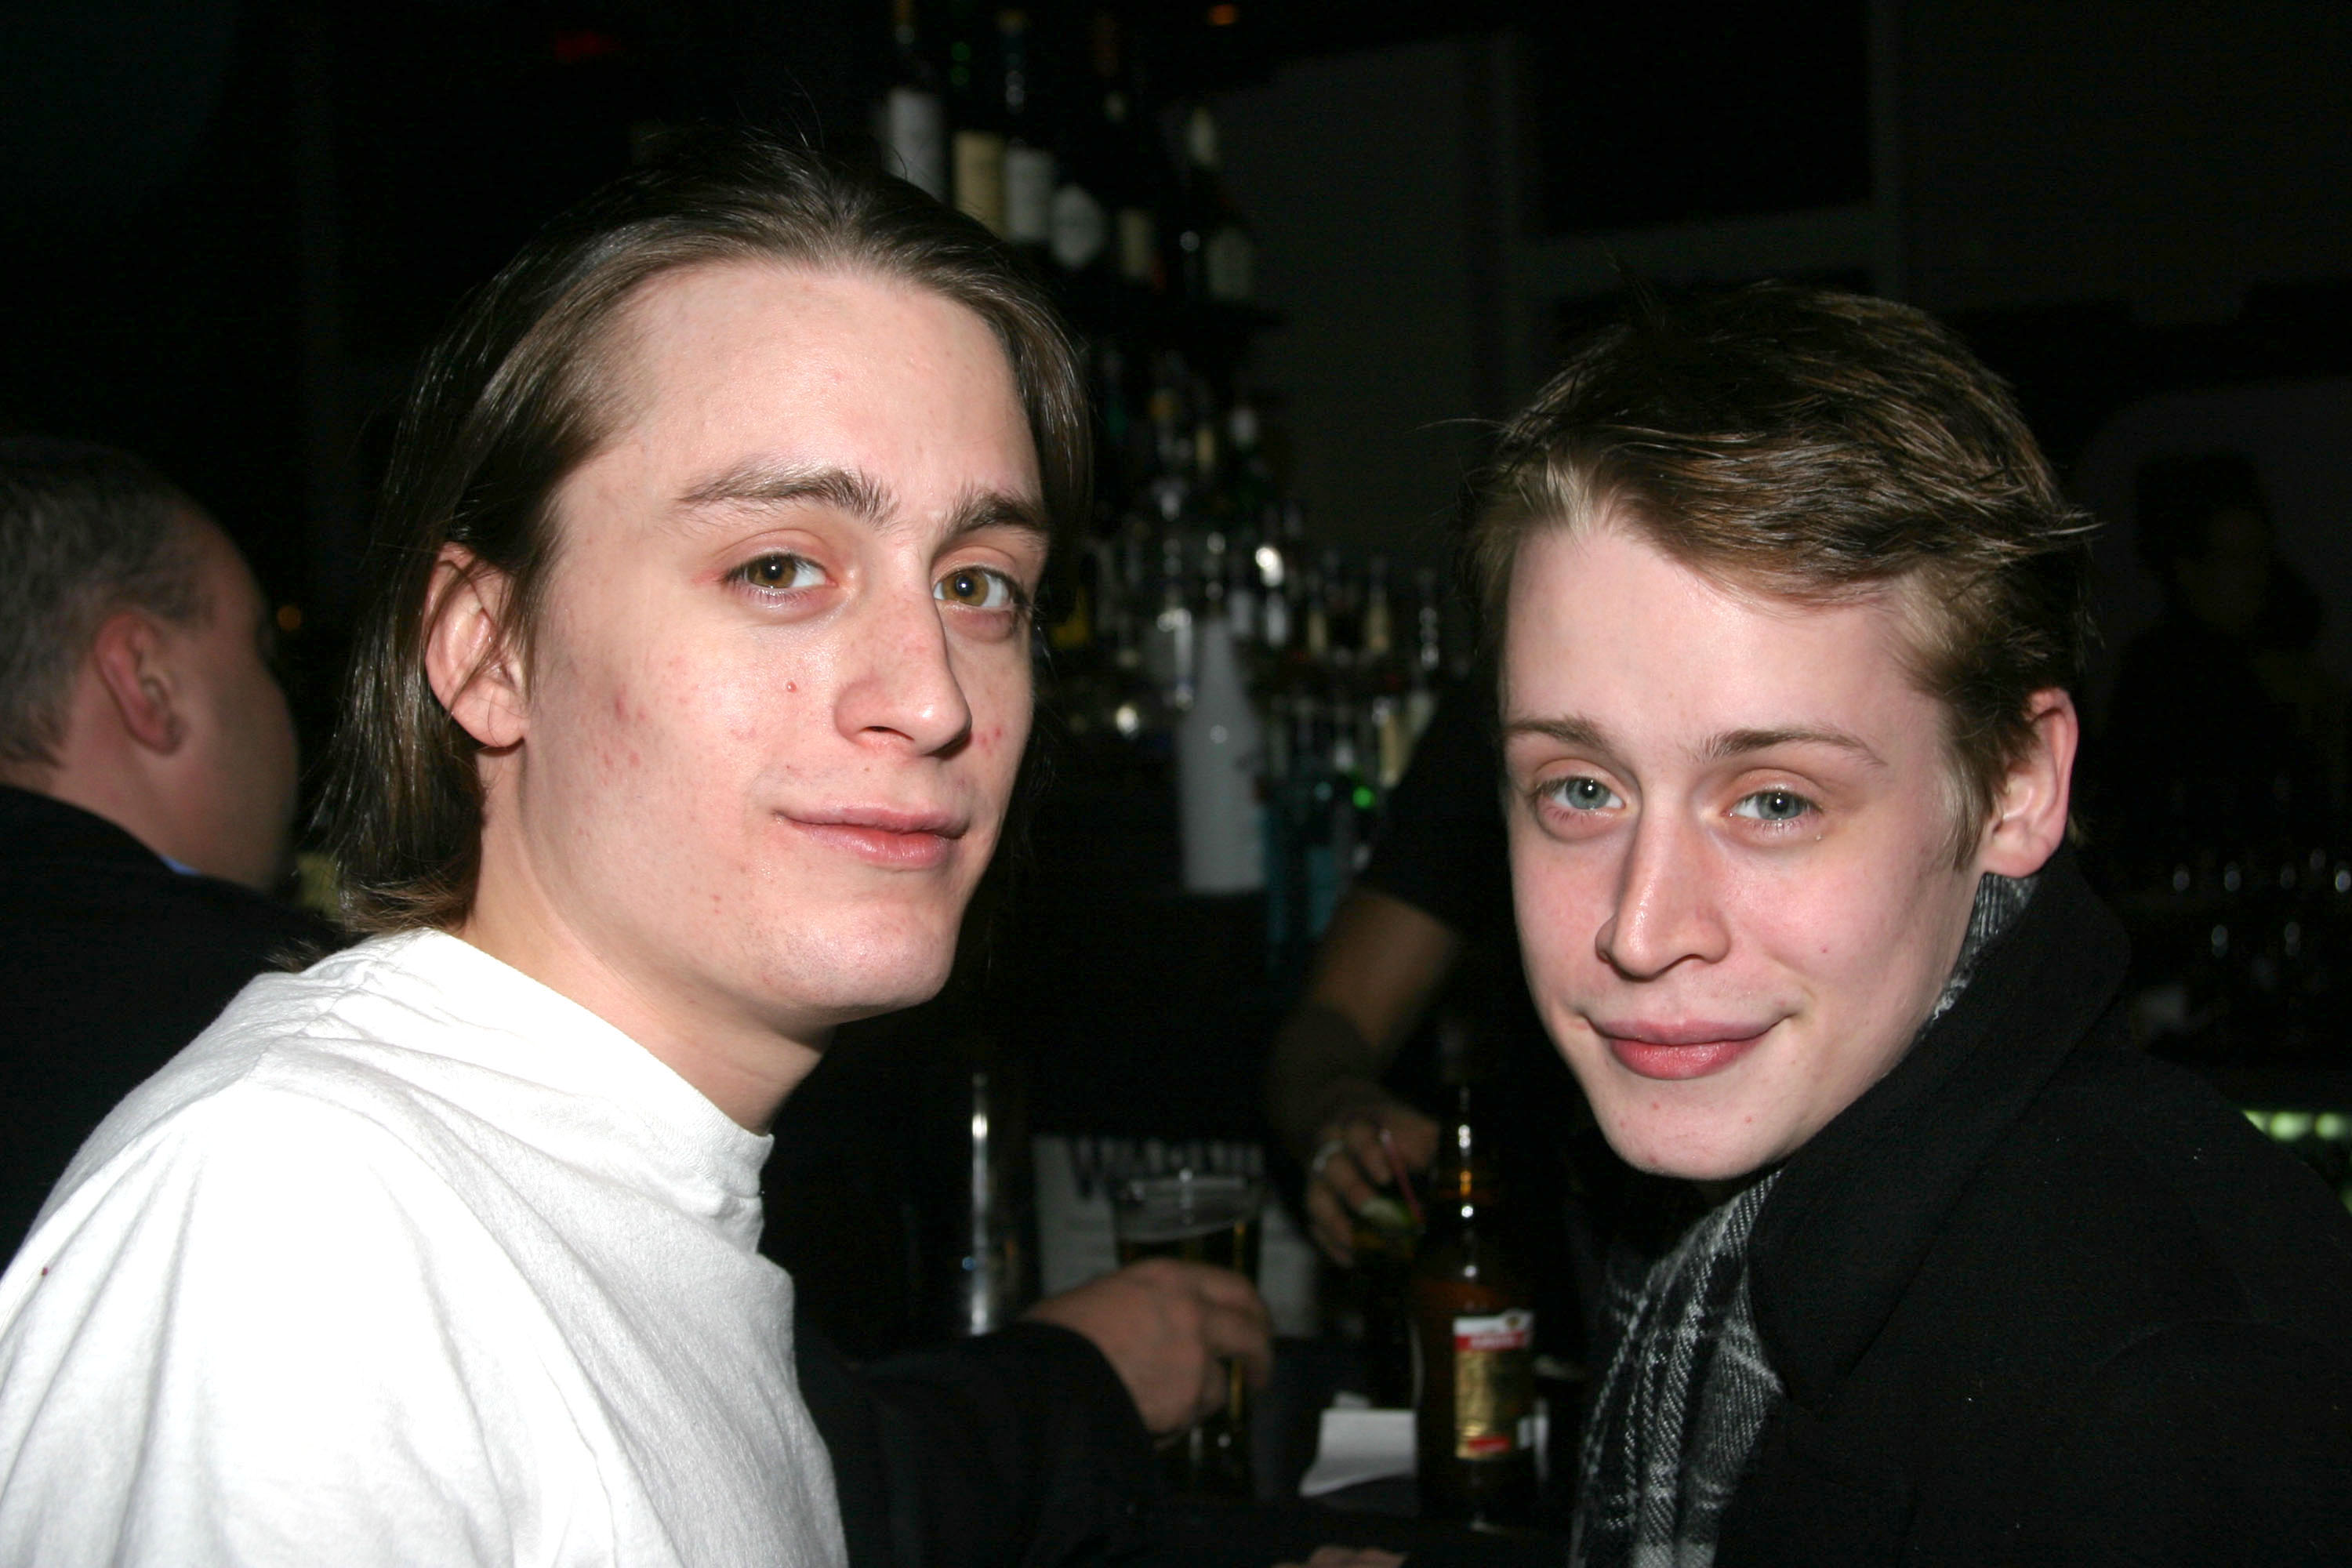 Kieran Culkin and Macaulay Culkin together in 2005.